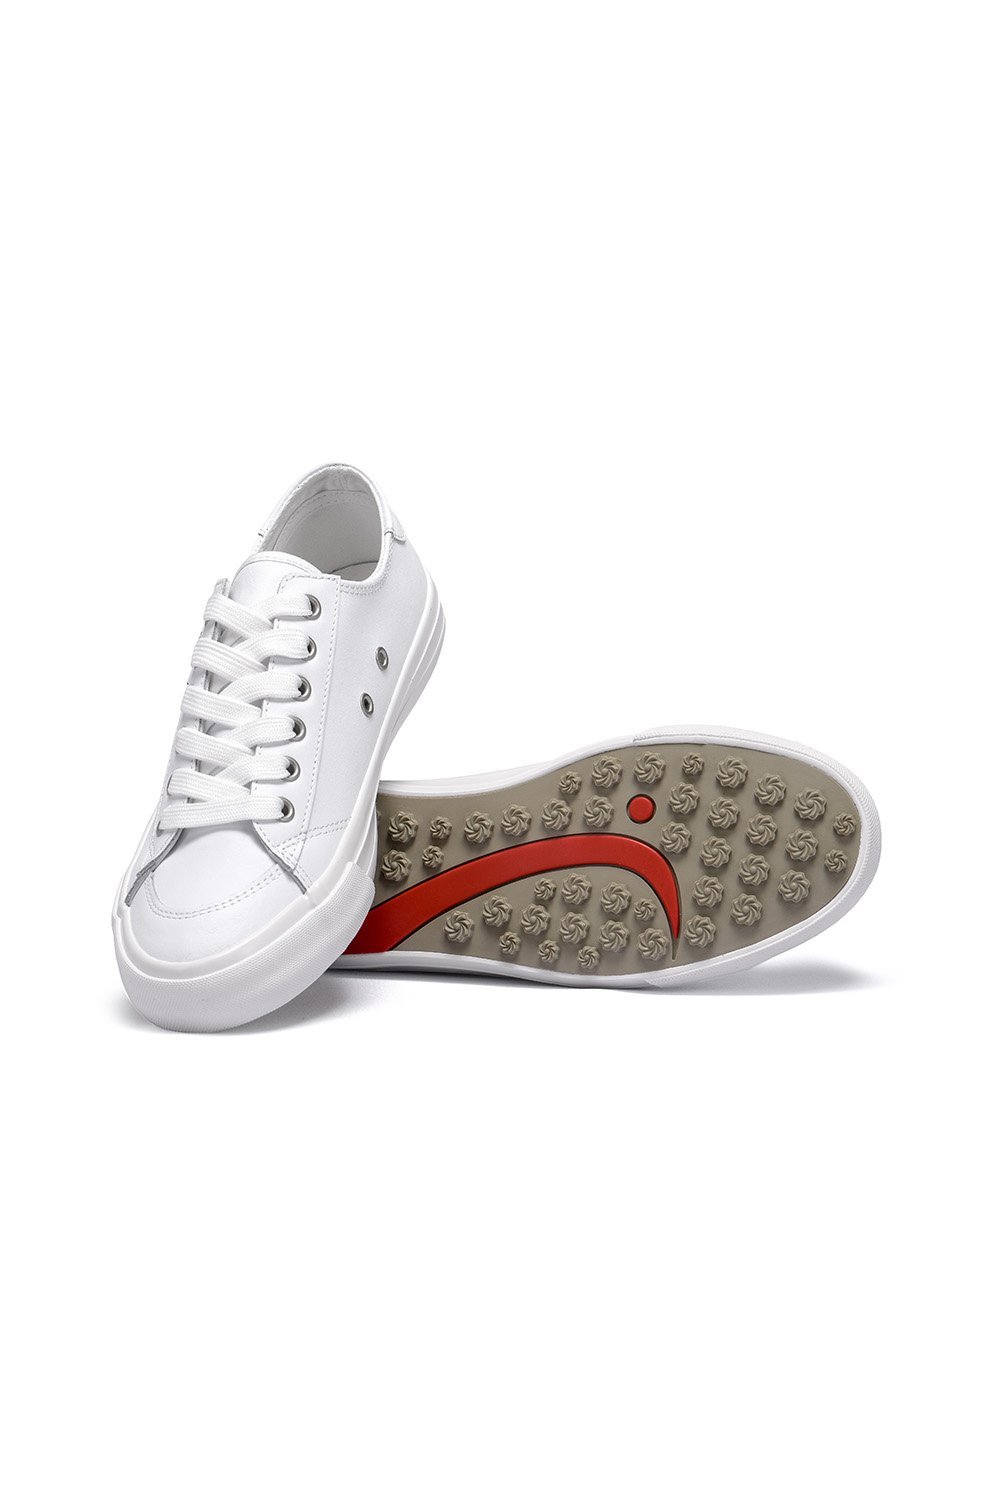 Spikeless White Leather Traveler Shoe by SwingDish